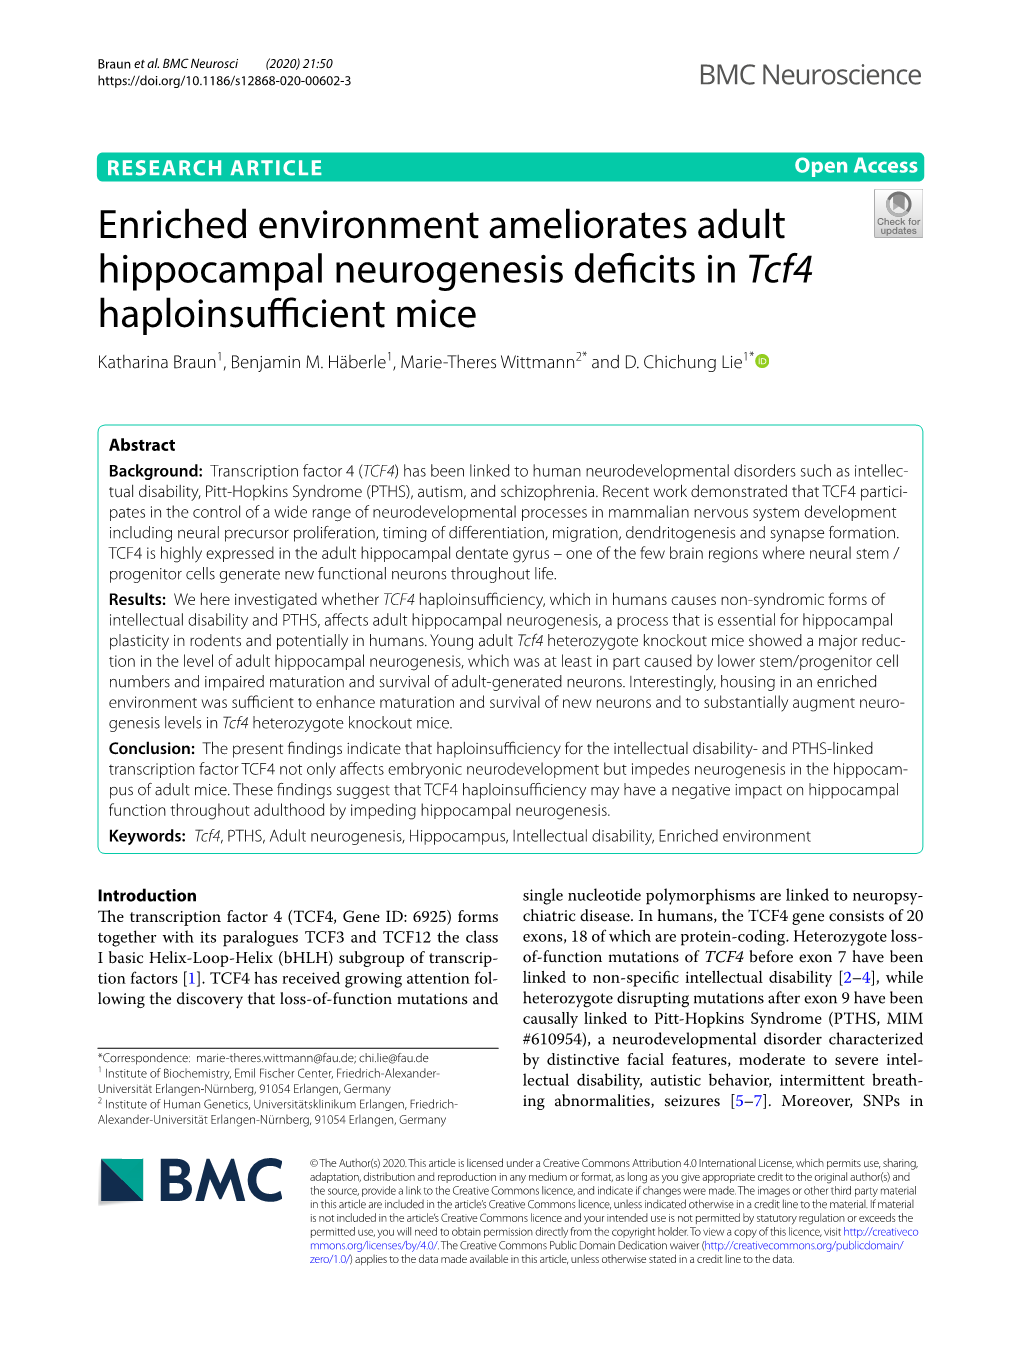 Enriched Environment Ameliorates Adult Hippocampal Neurogenesis Defcits in Tcf4 Haploinsufcient Mice Katharina Braun1, Benjamin M